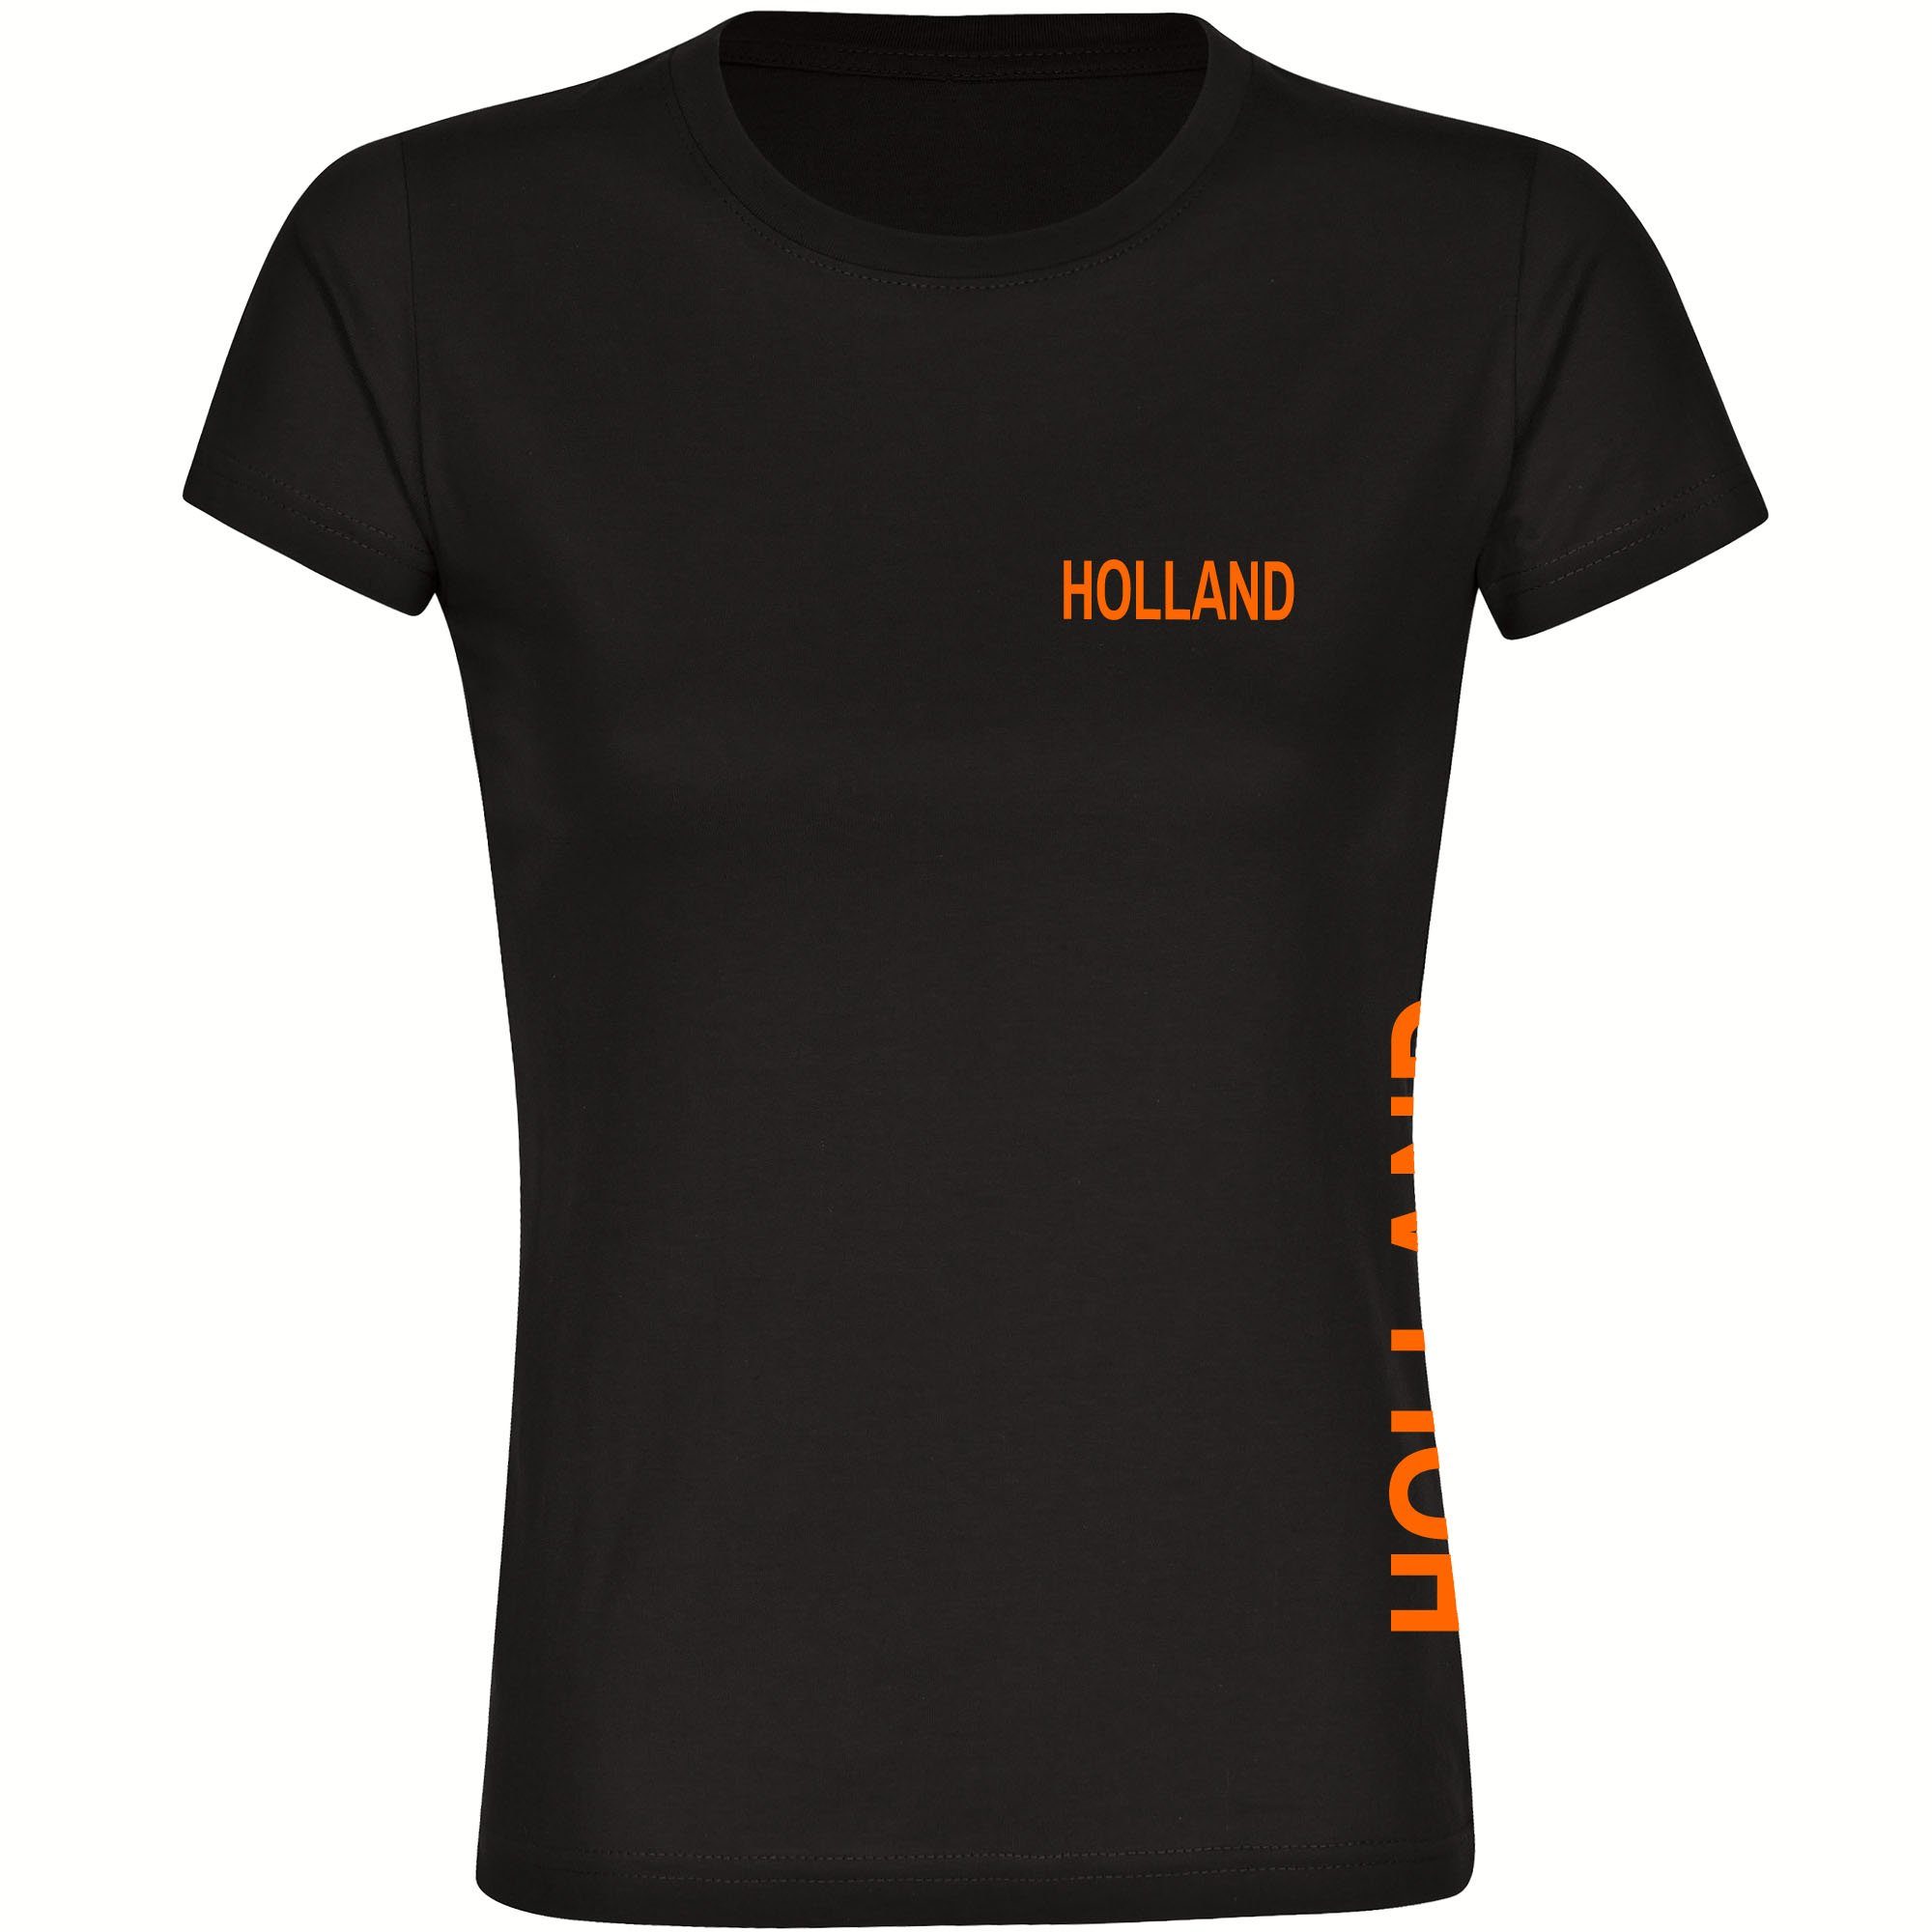 multifanshop T-Shirt Damen Holland - Brust & Seite - Frauen